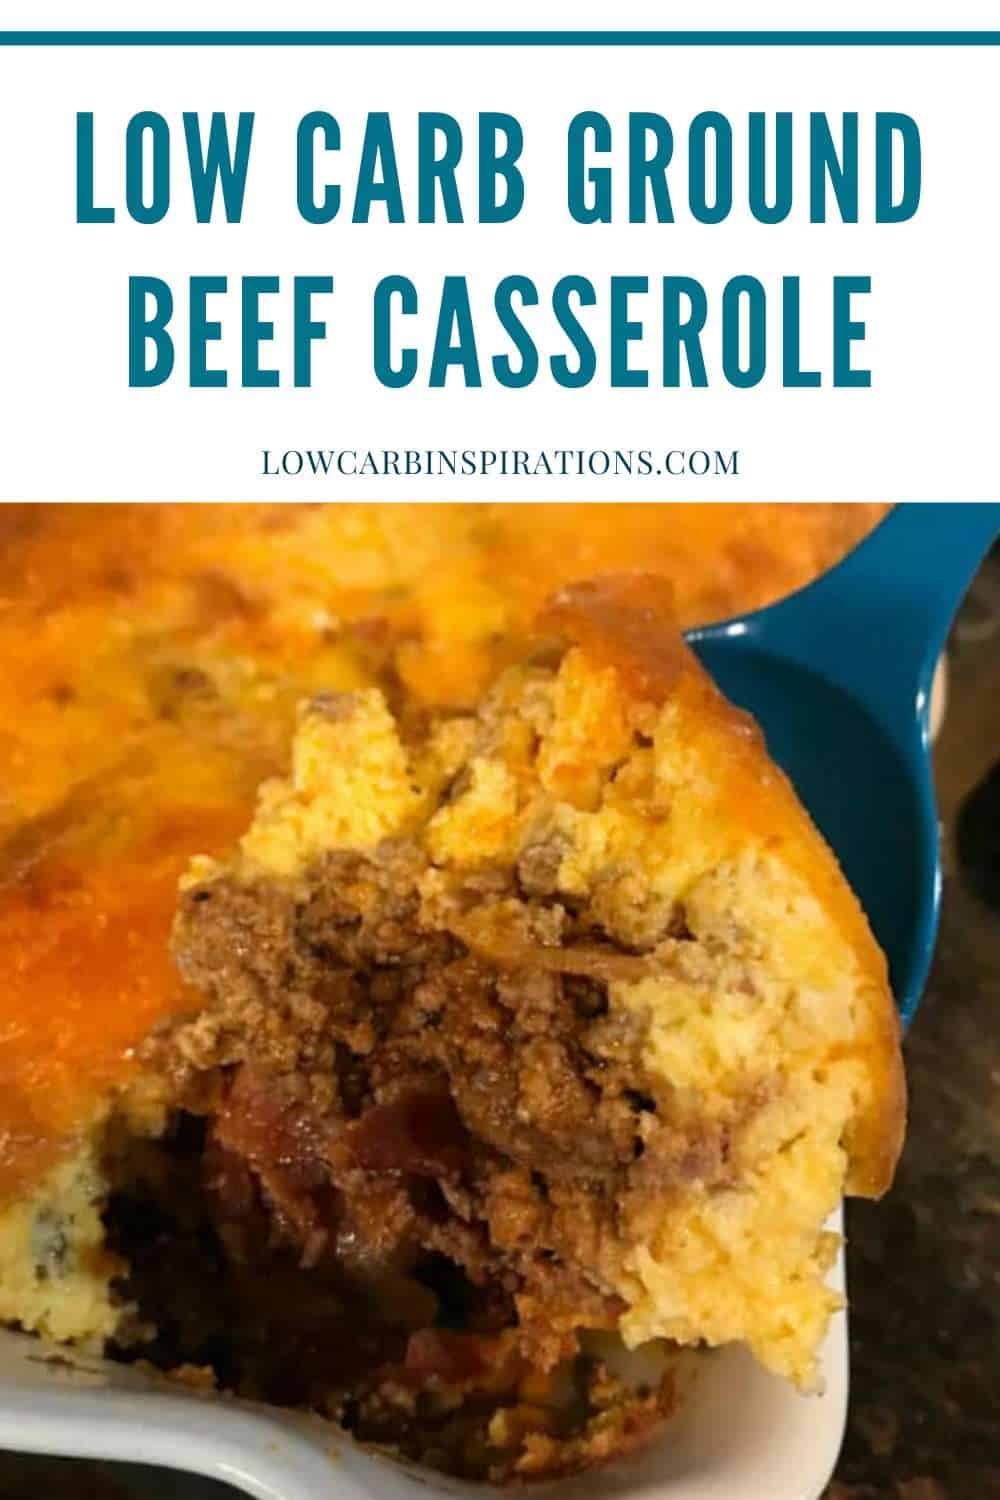 Low Carb Ground Beef Casserole Recipe